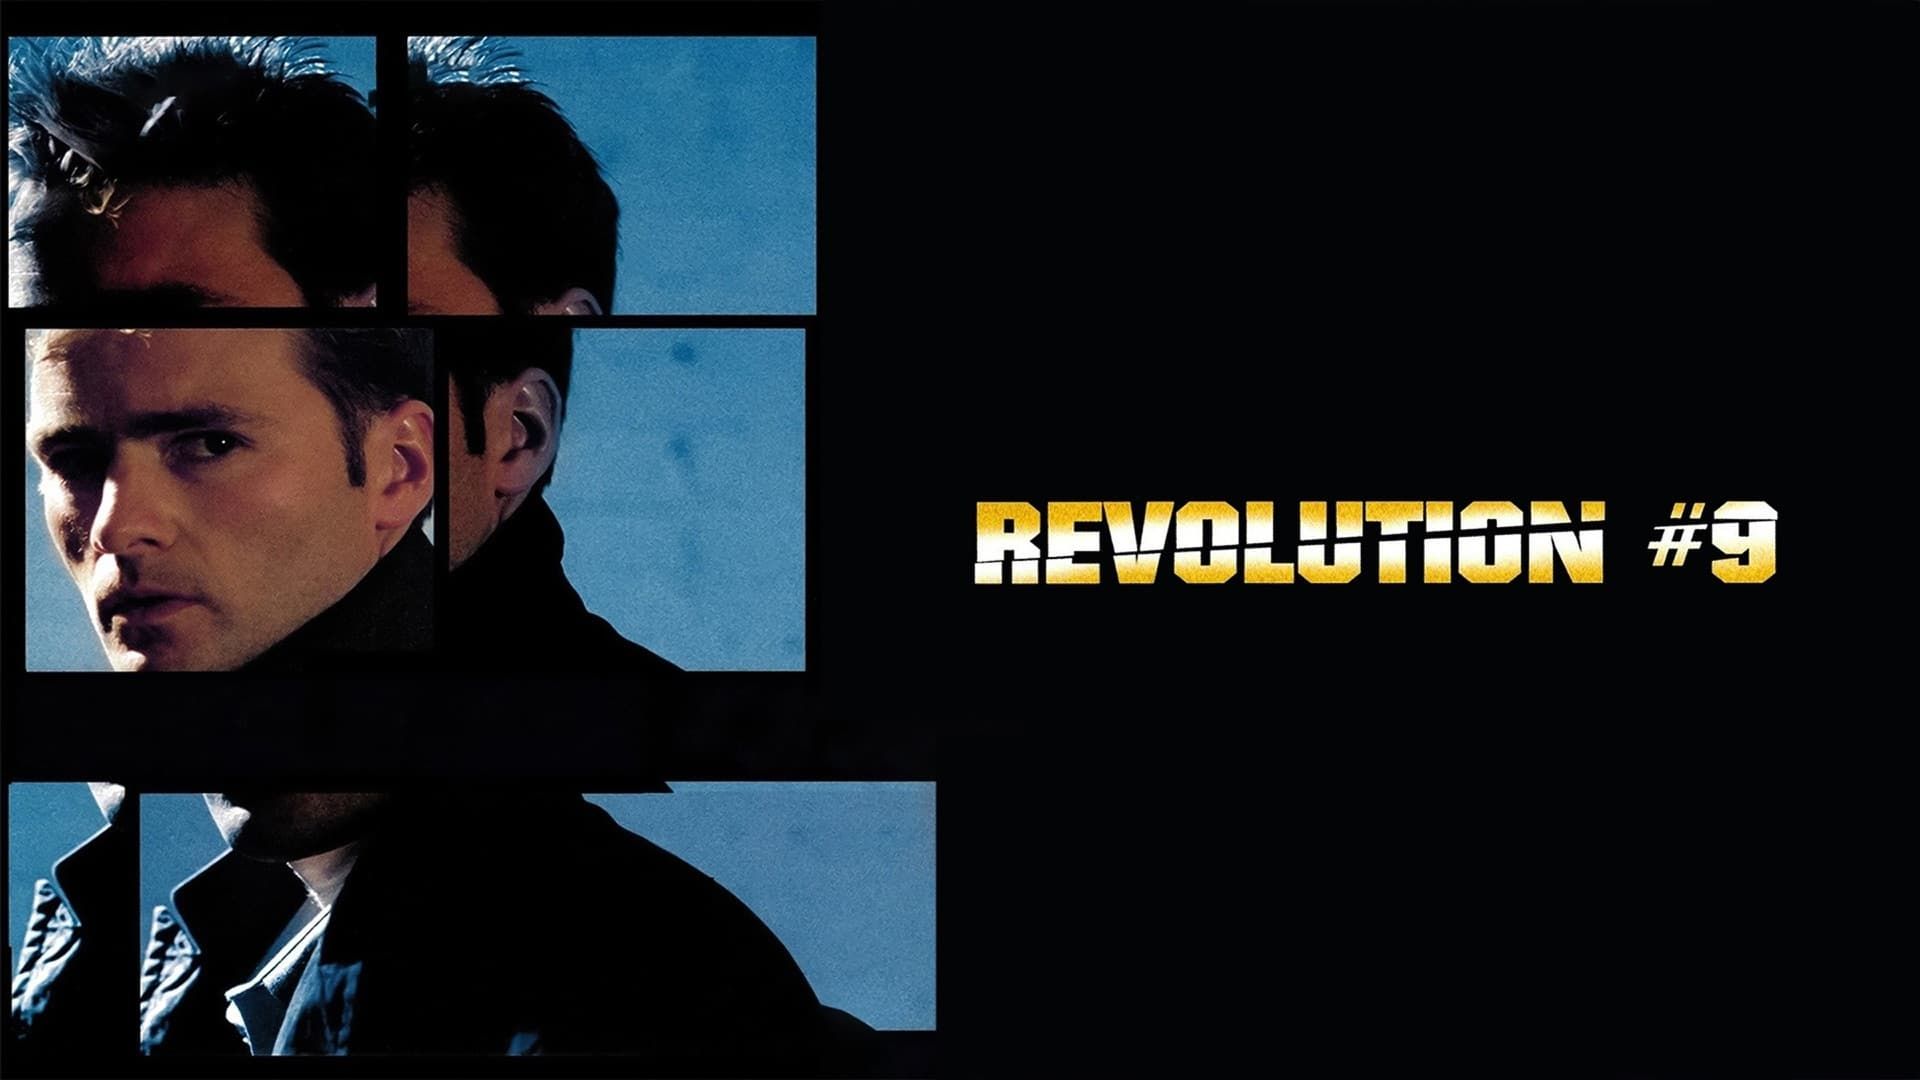 Revolution #9 background